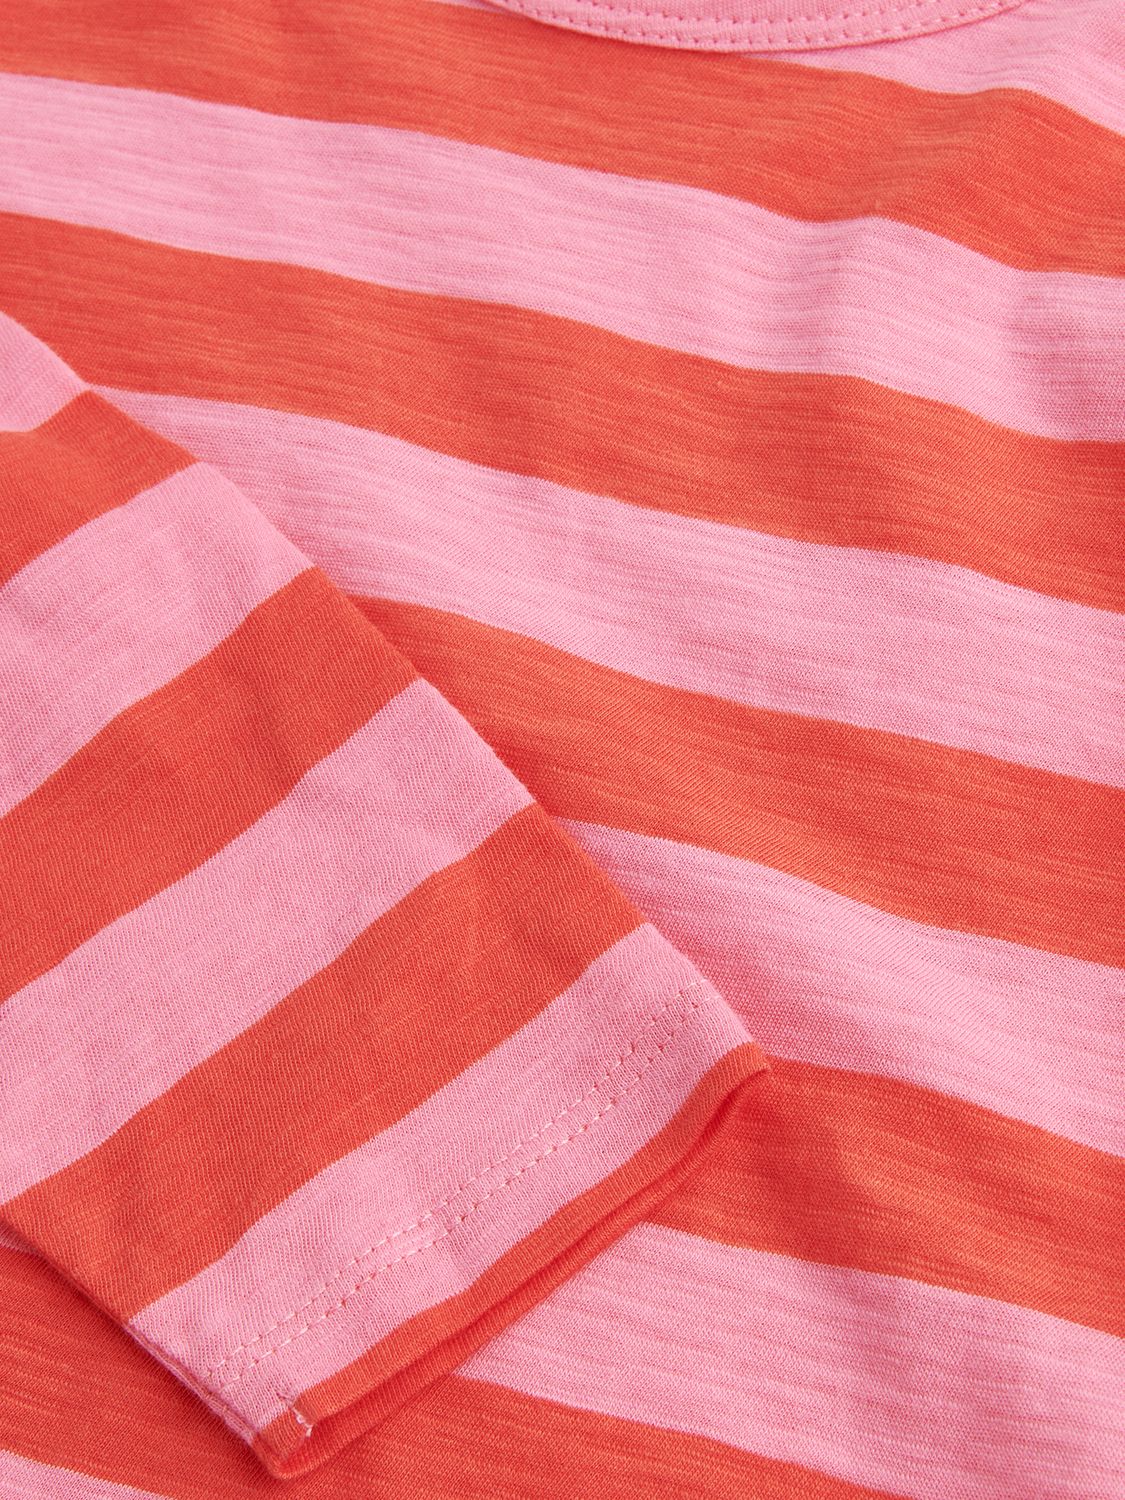 Whistles Kids' Cotton Stripe Long Sleeve Top, Pink, 3-4 years